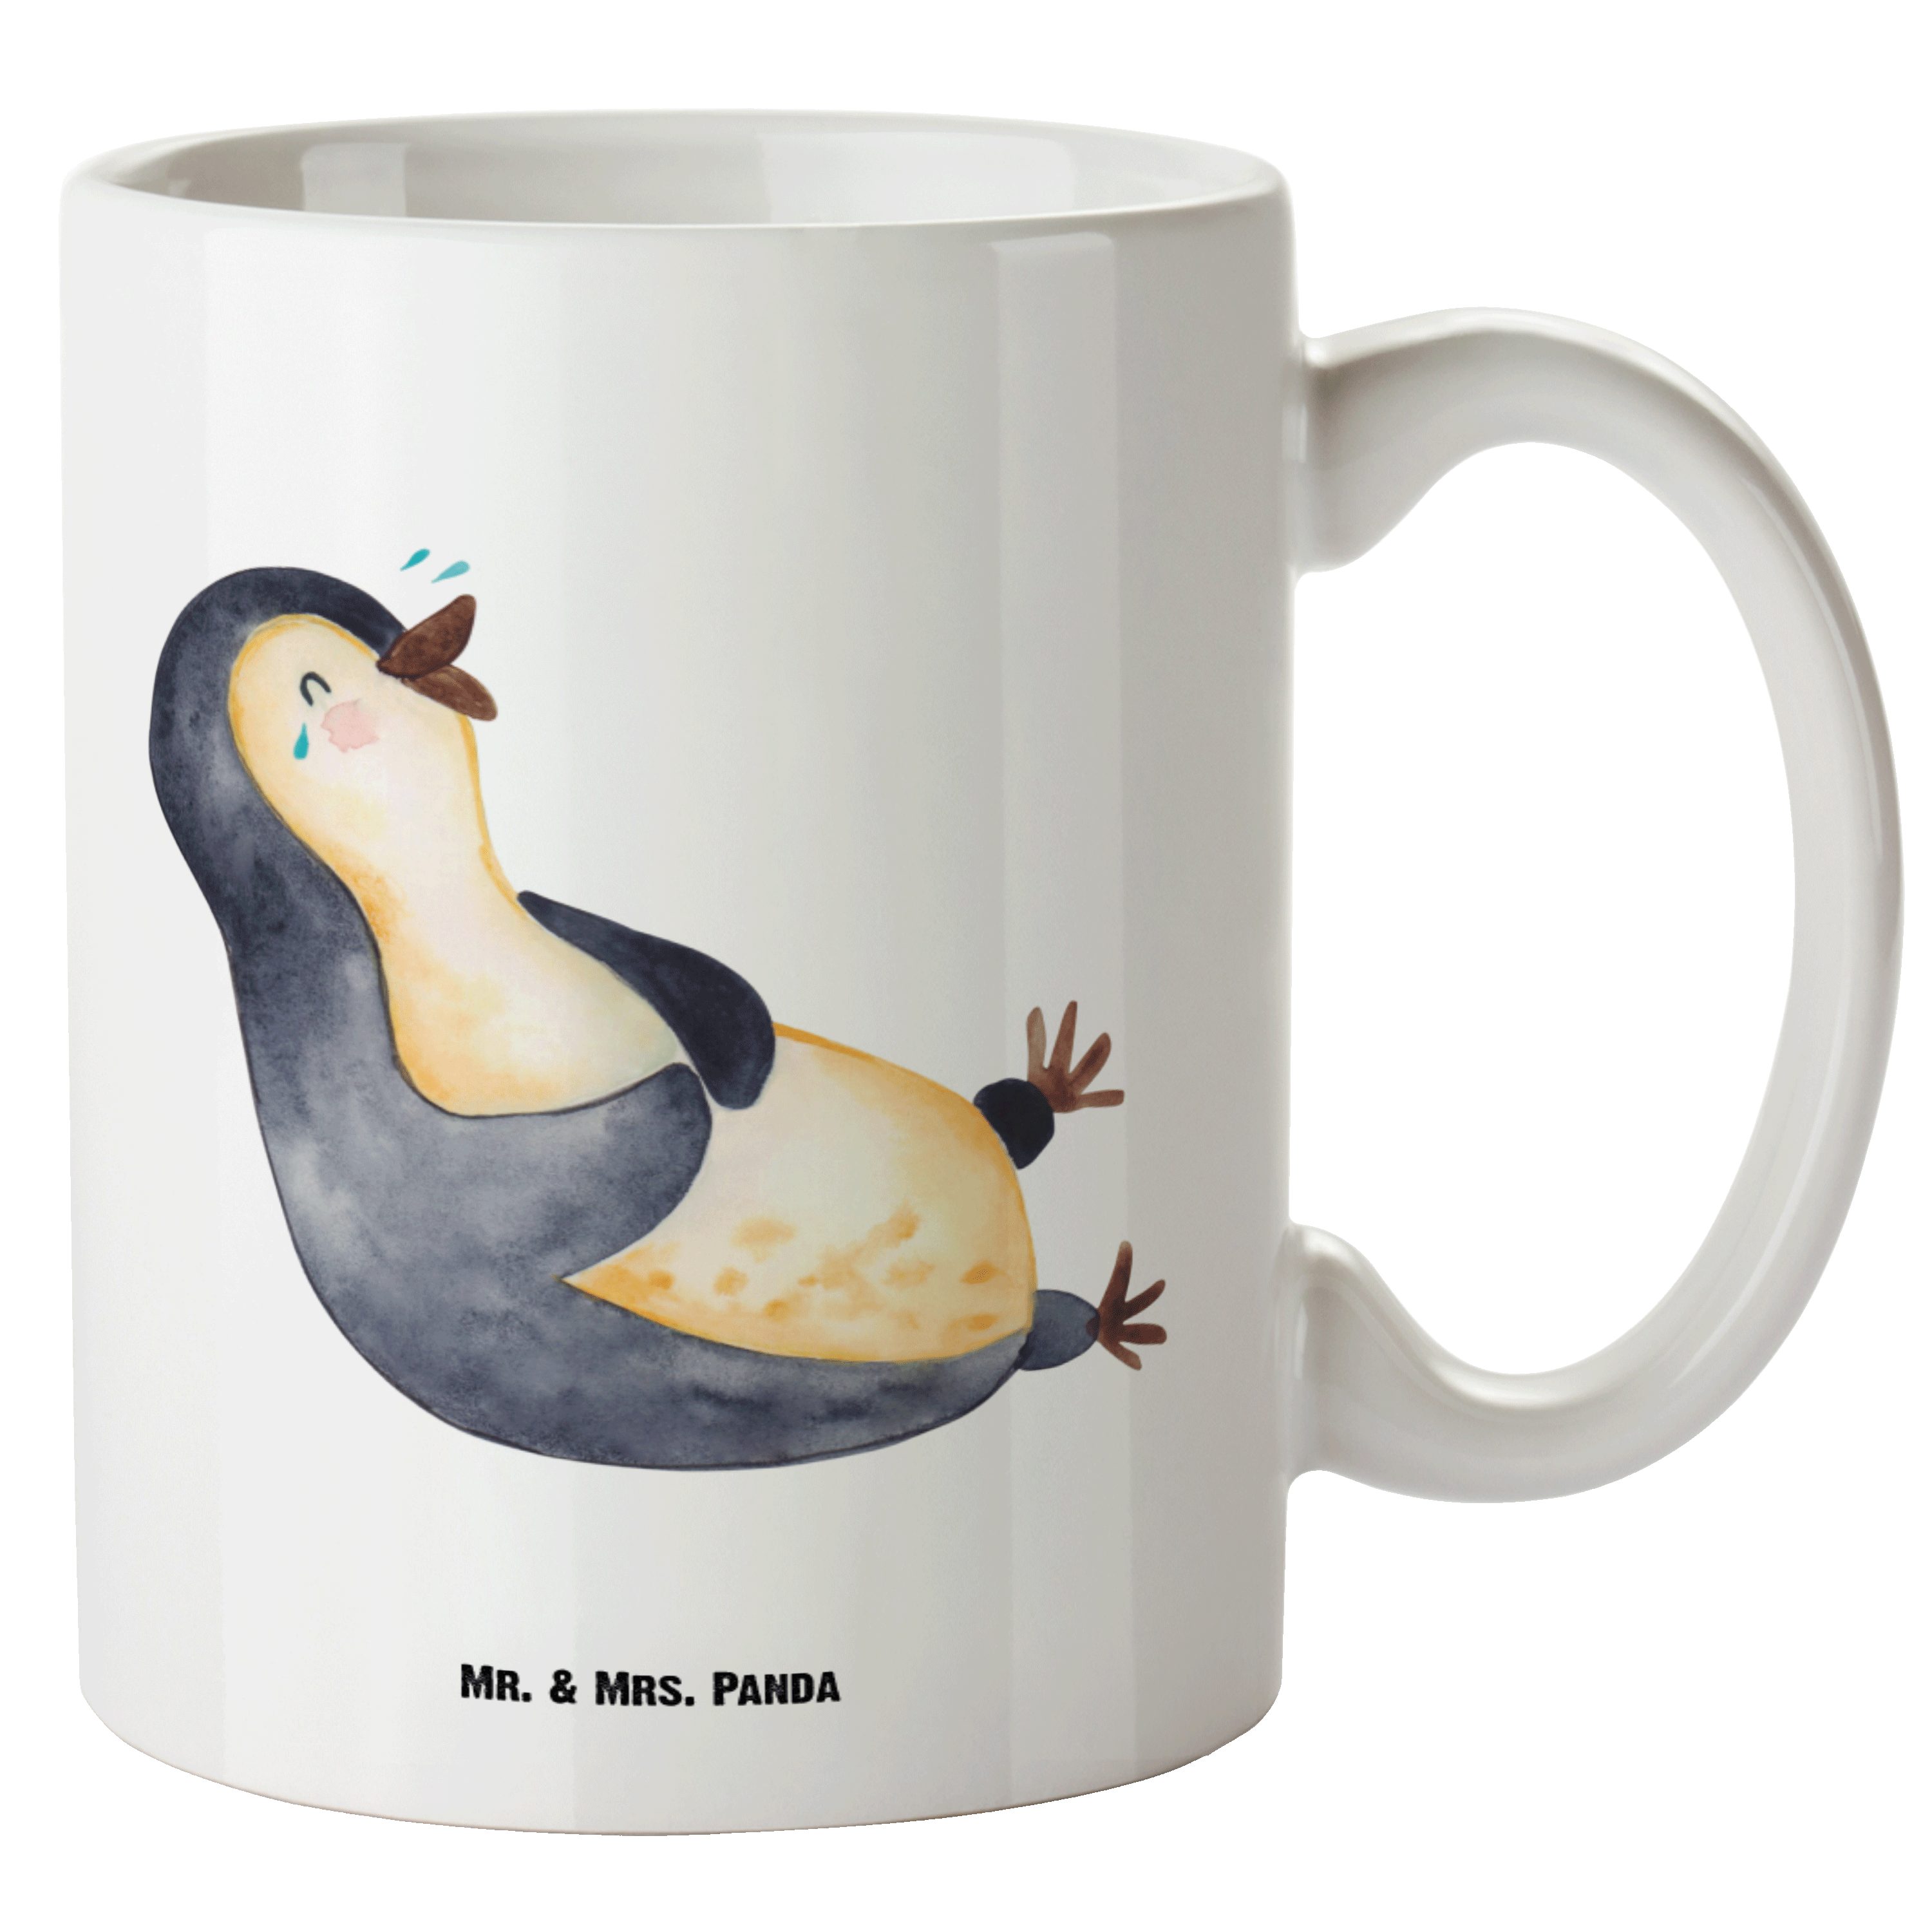 Mr. & Mrs. Panda Tasse Pinguin lachend - Weiß - Geschenk, XL Tasse, lol, Grosse Kaffeetasse, XL Tasse Keramik